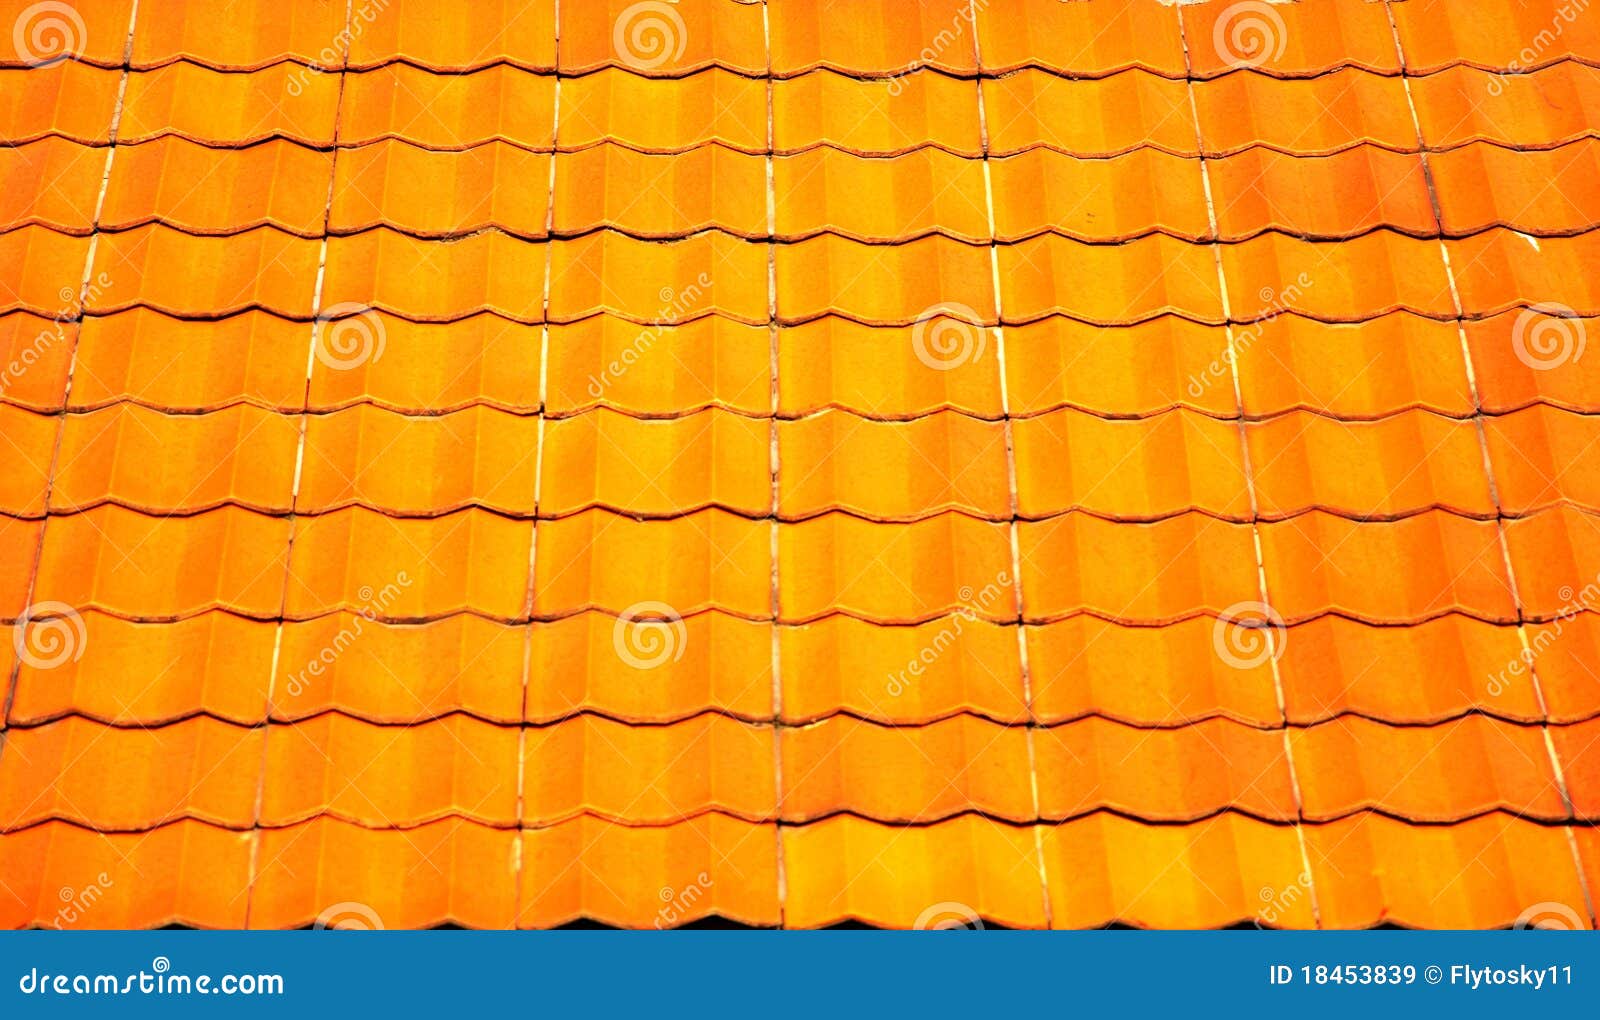 Orange tile roof stock image. Image of texture, background - 18453839